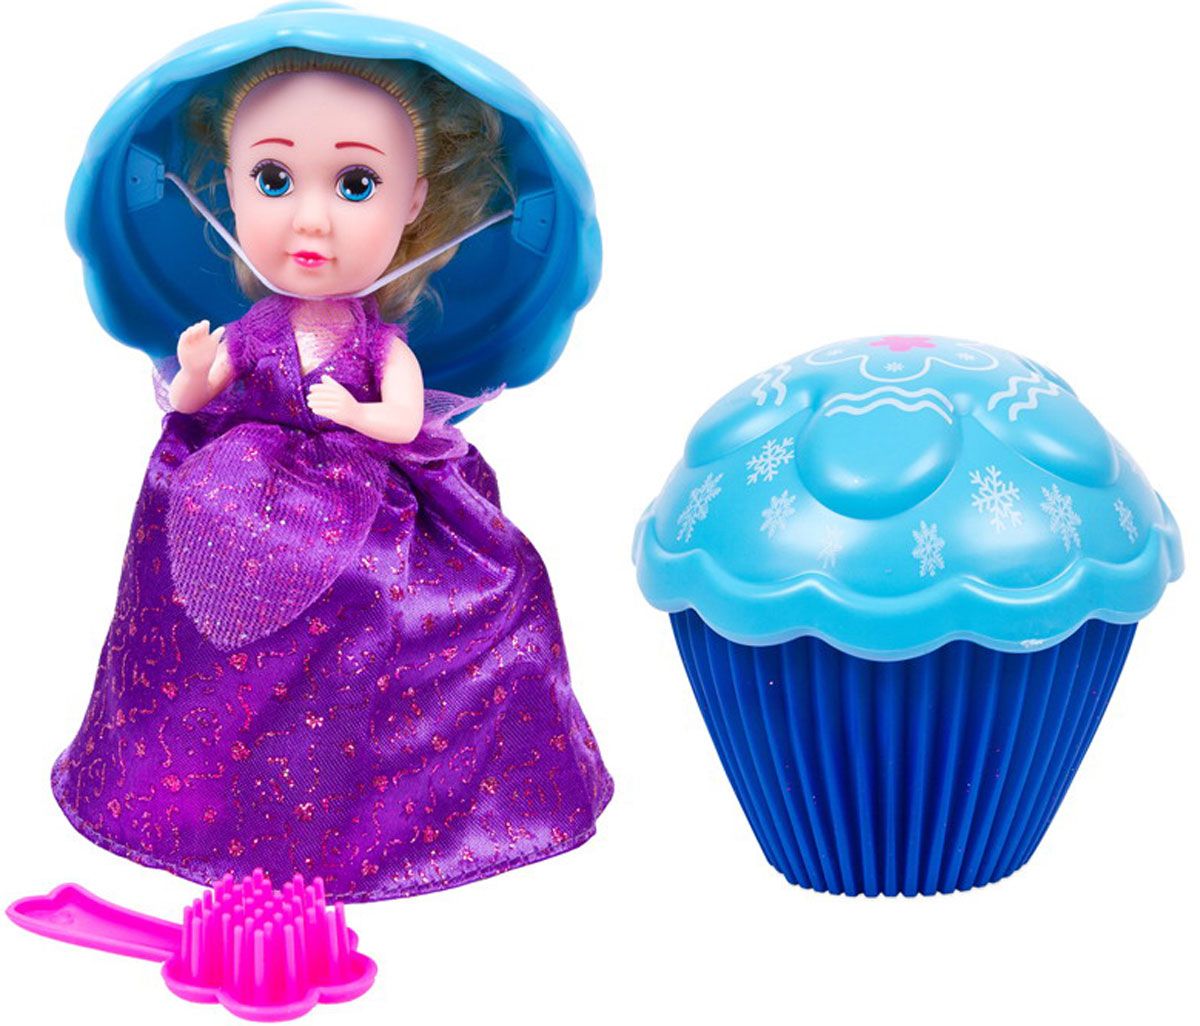 Emco - Cupcake Surprise Violet